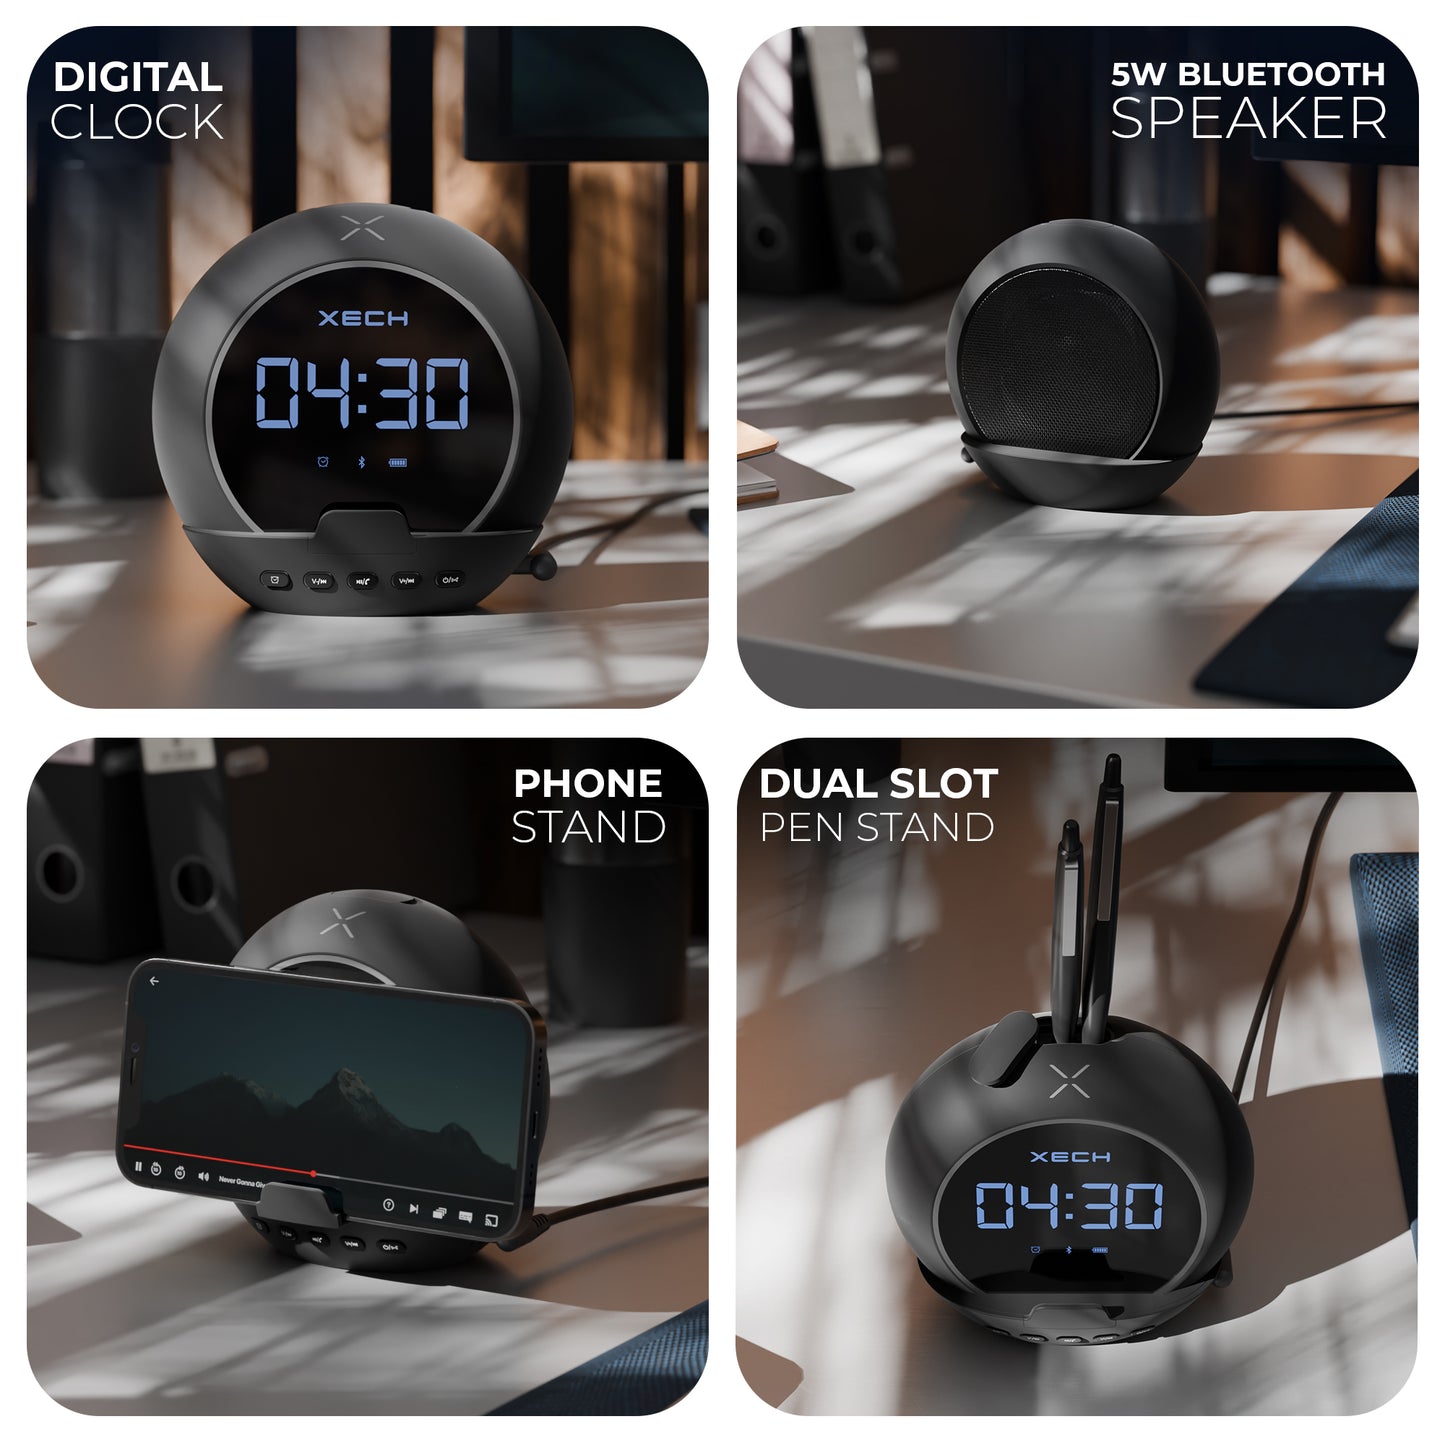 xech multifunctional Digital Alarm Clock with Speaker Ellipse